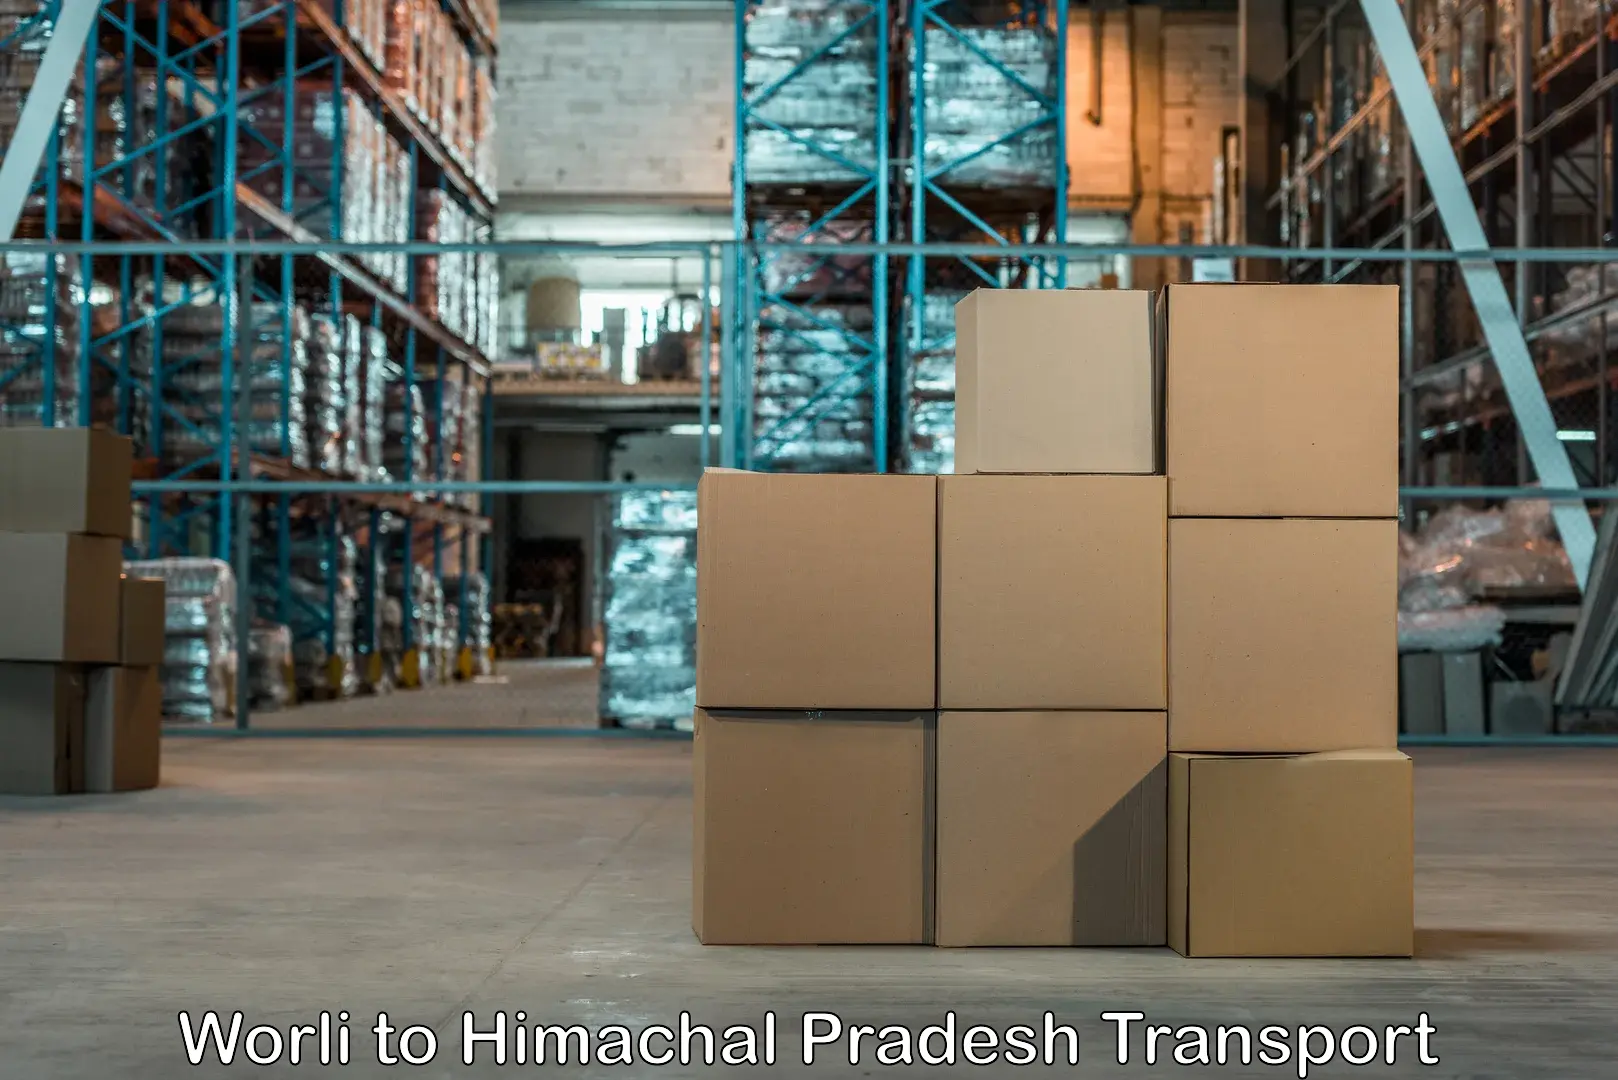 Truck transport companies in India Worli to Himachal Pradesh